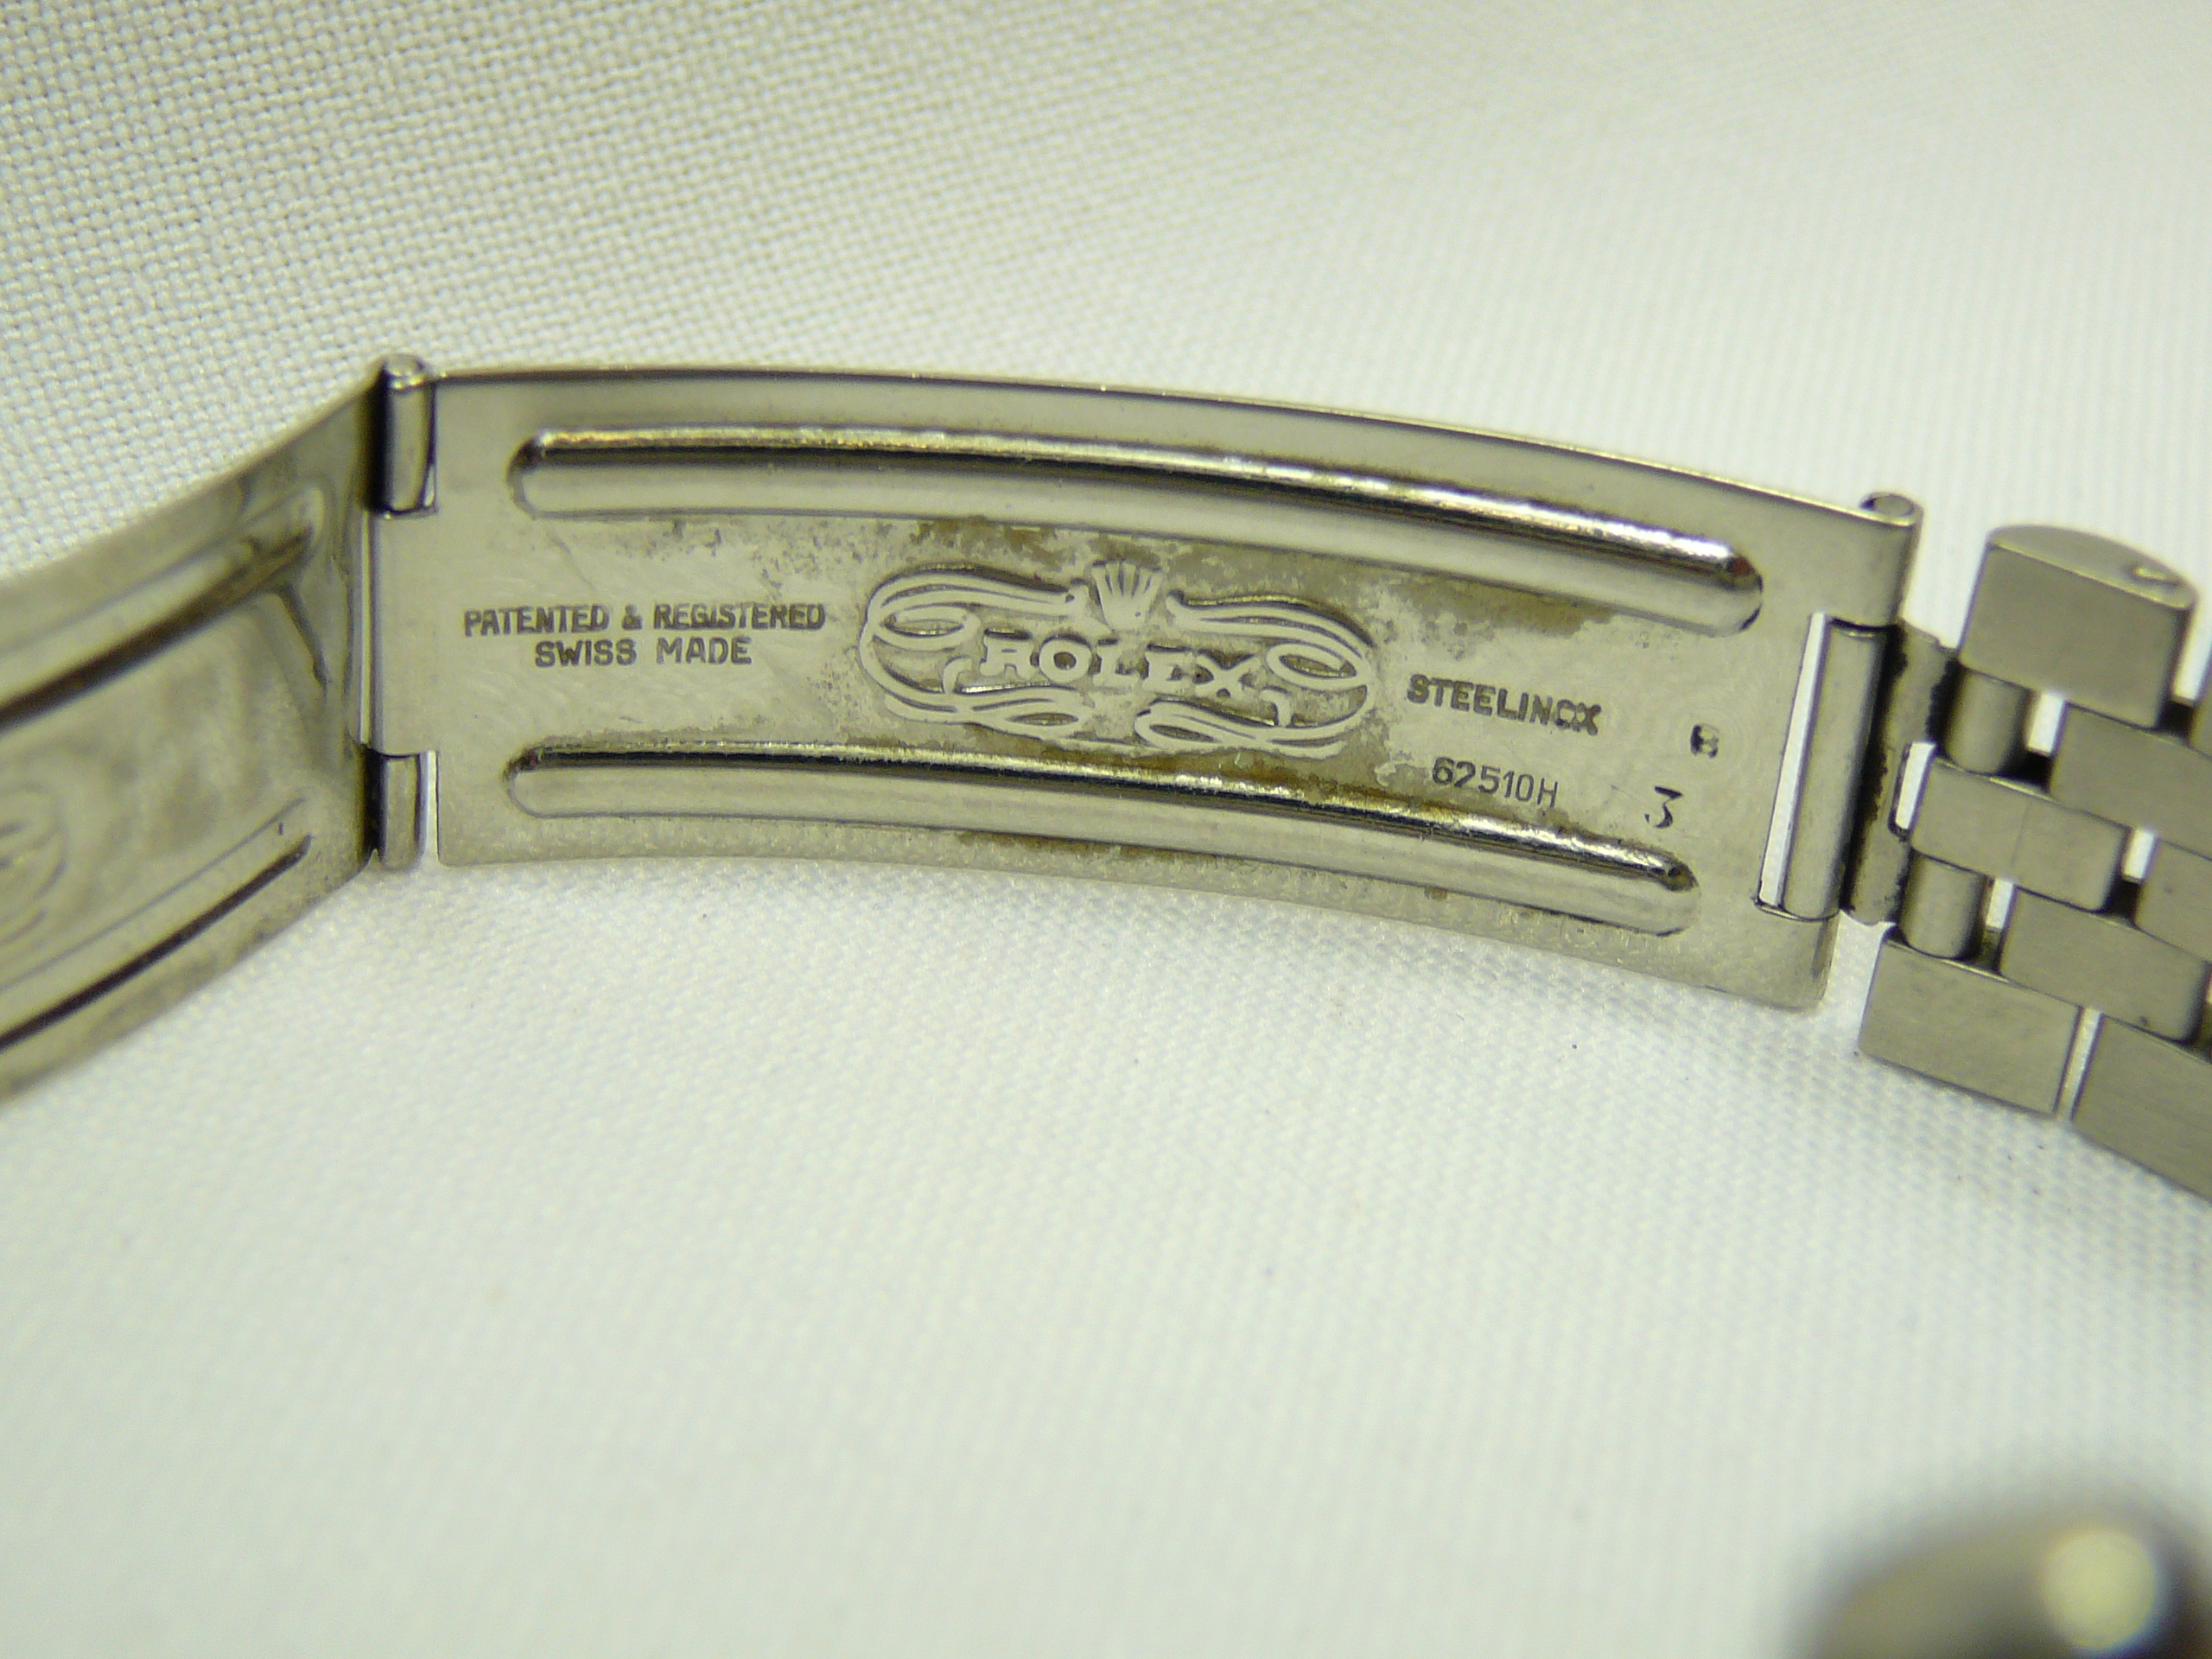 Gents Rolex Wristwatch - Image 6 of 6